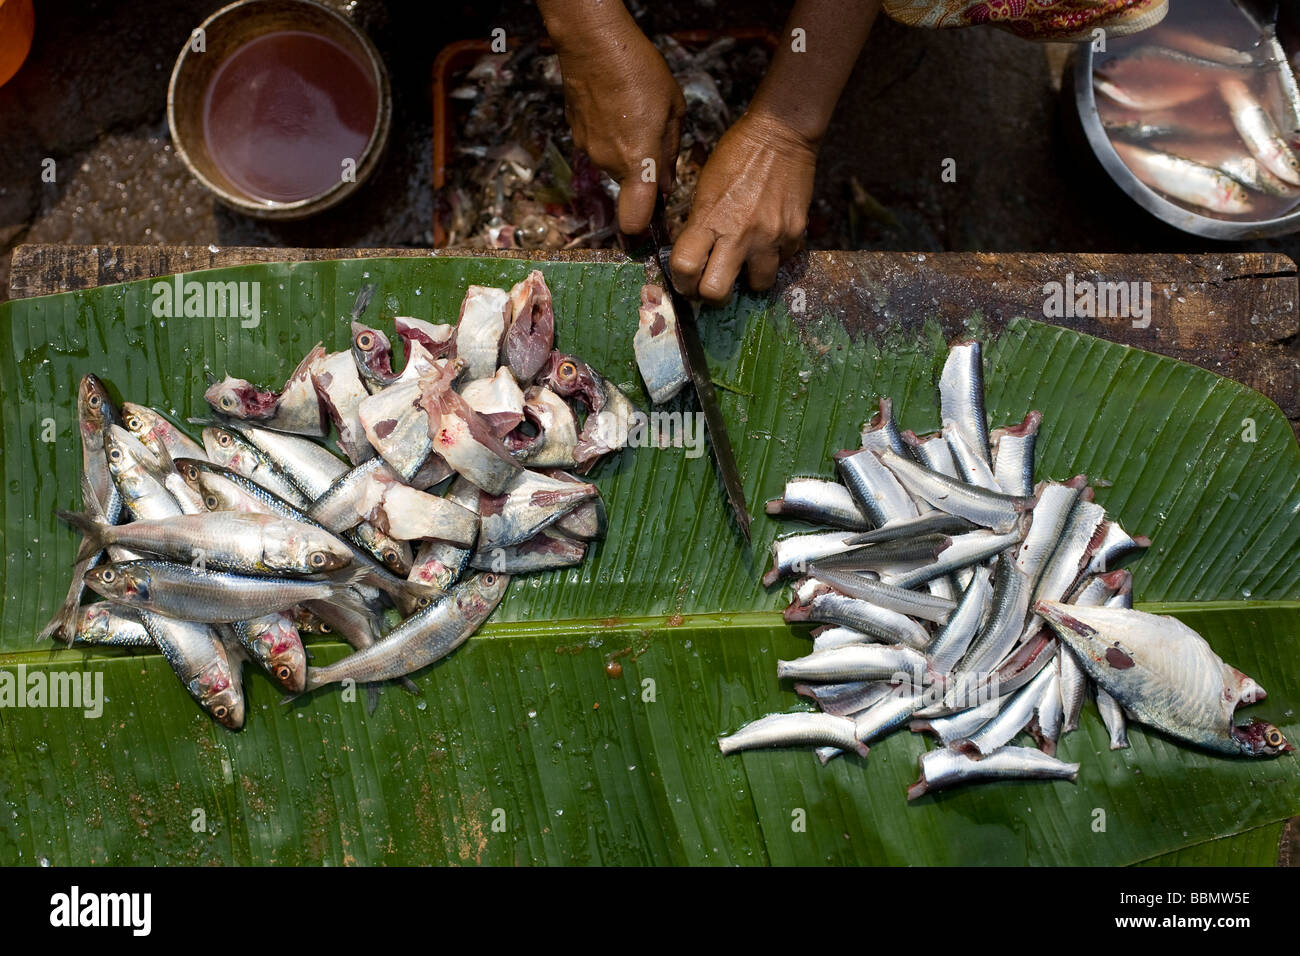 https://c8.alamy.com/comp/BBMW5E/an-indian-christian-woman-fish-vendor-cuts-small-fish-on-a-banana-BBMW5E.jpg